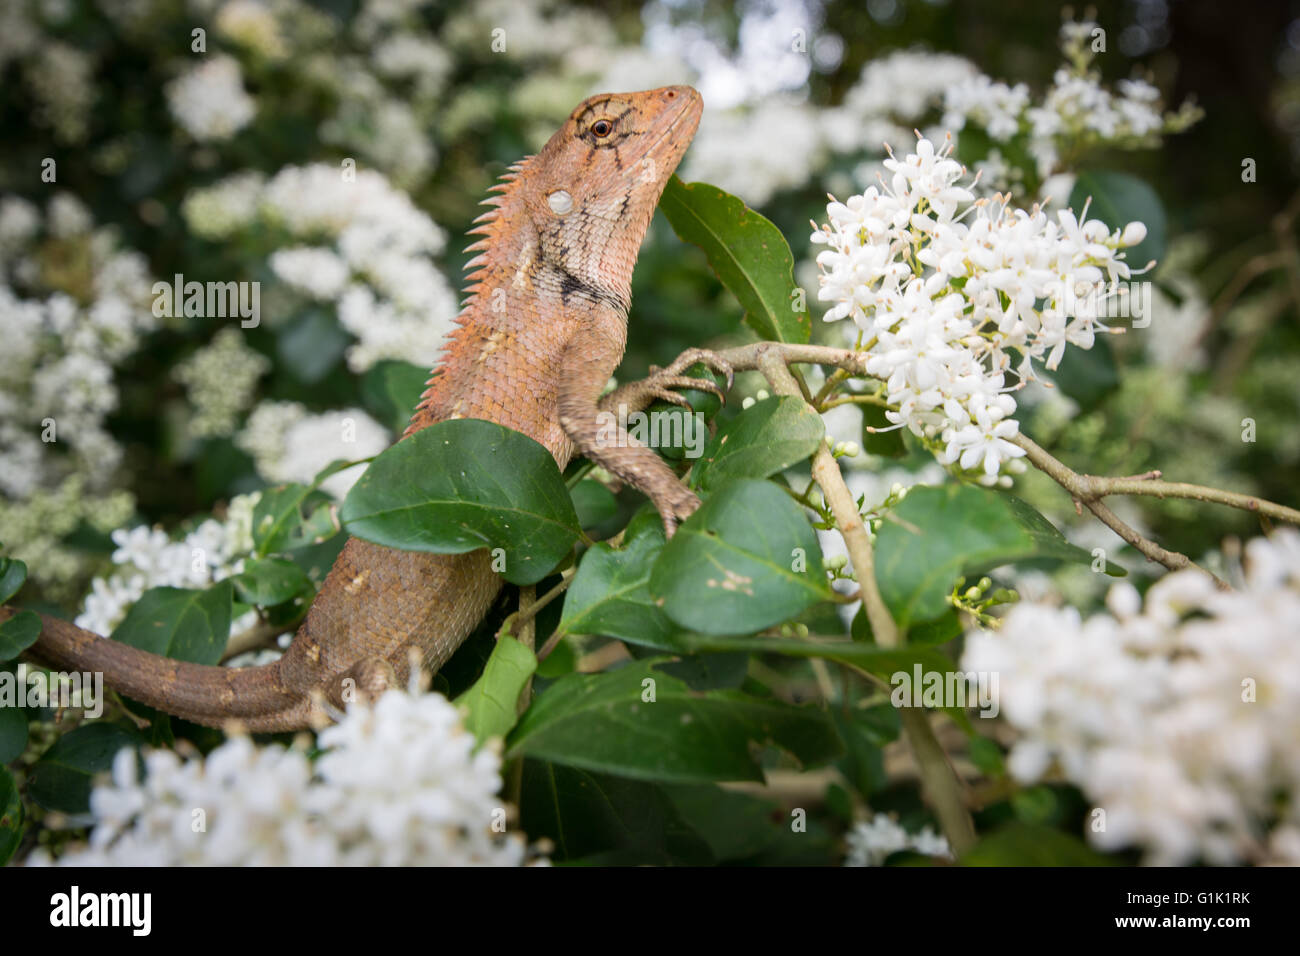 Lizard in tree Stock Photo